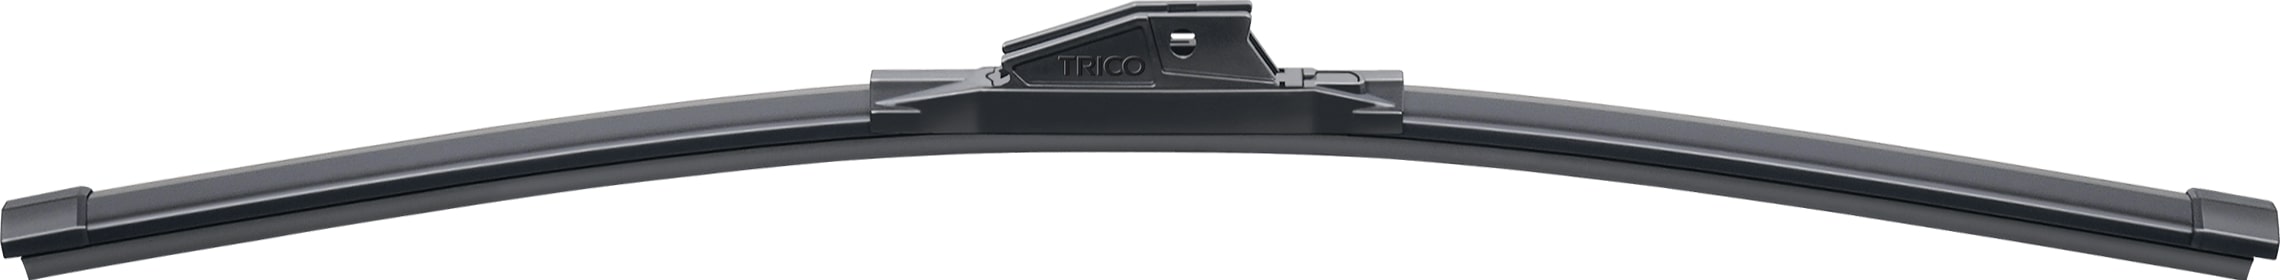 TRICO Wiper Blades - 35 Series ICE 26"